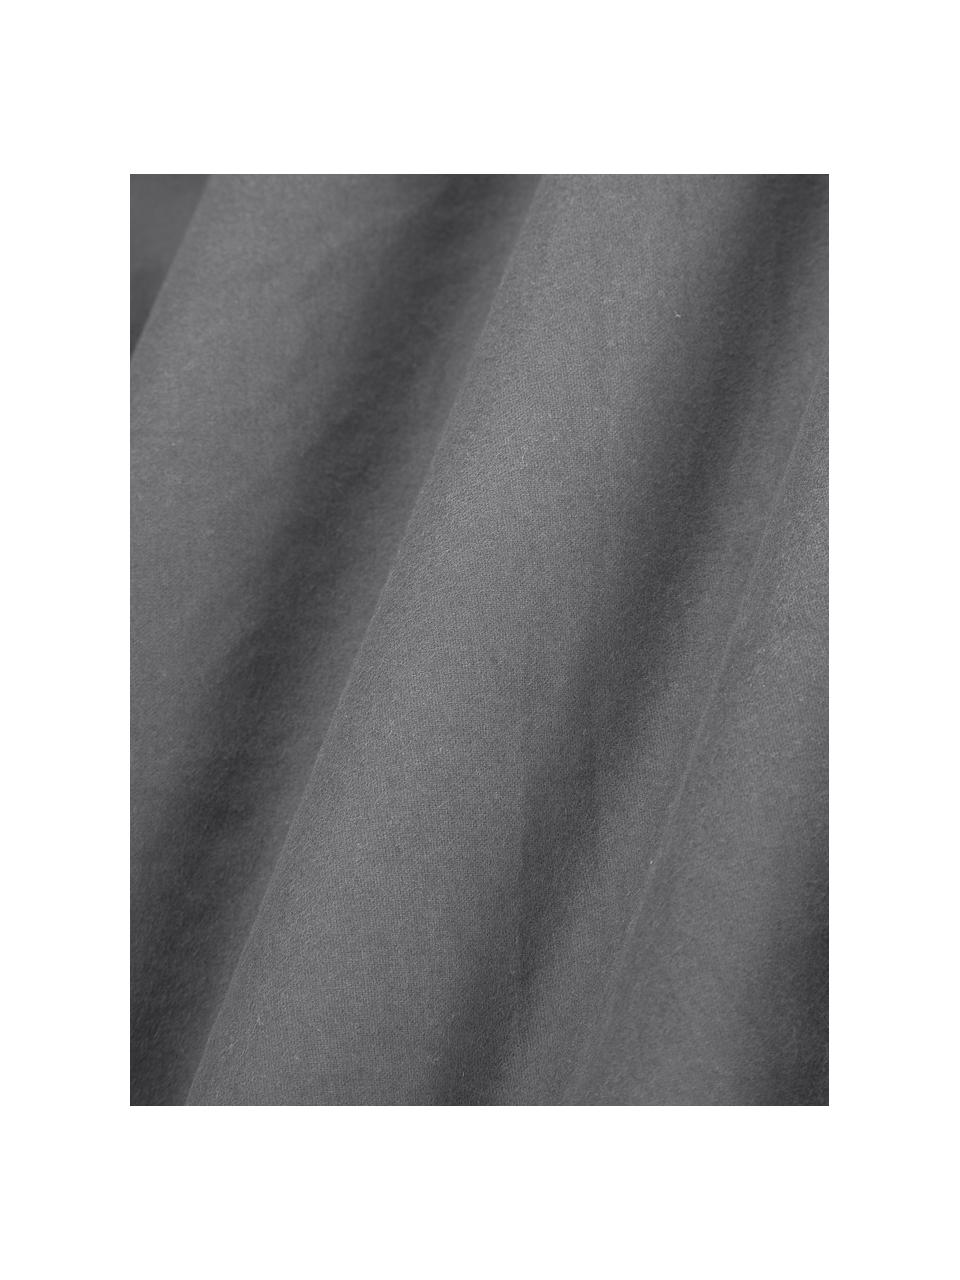 Sábana bajera cubrecolchón de franela Biba, Gris oscuro, Cama 200 cm (200 x 200 x 15 cm)